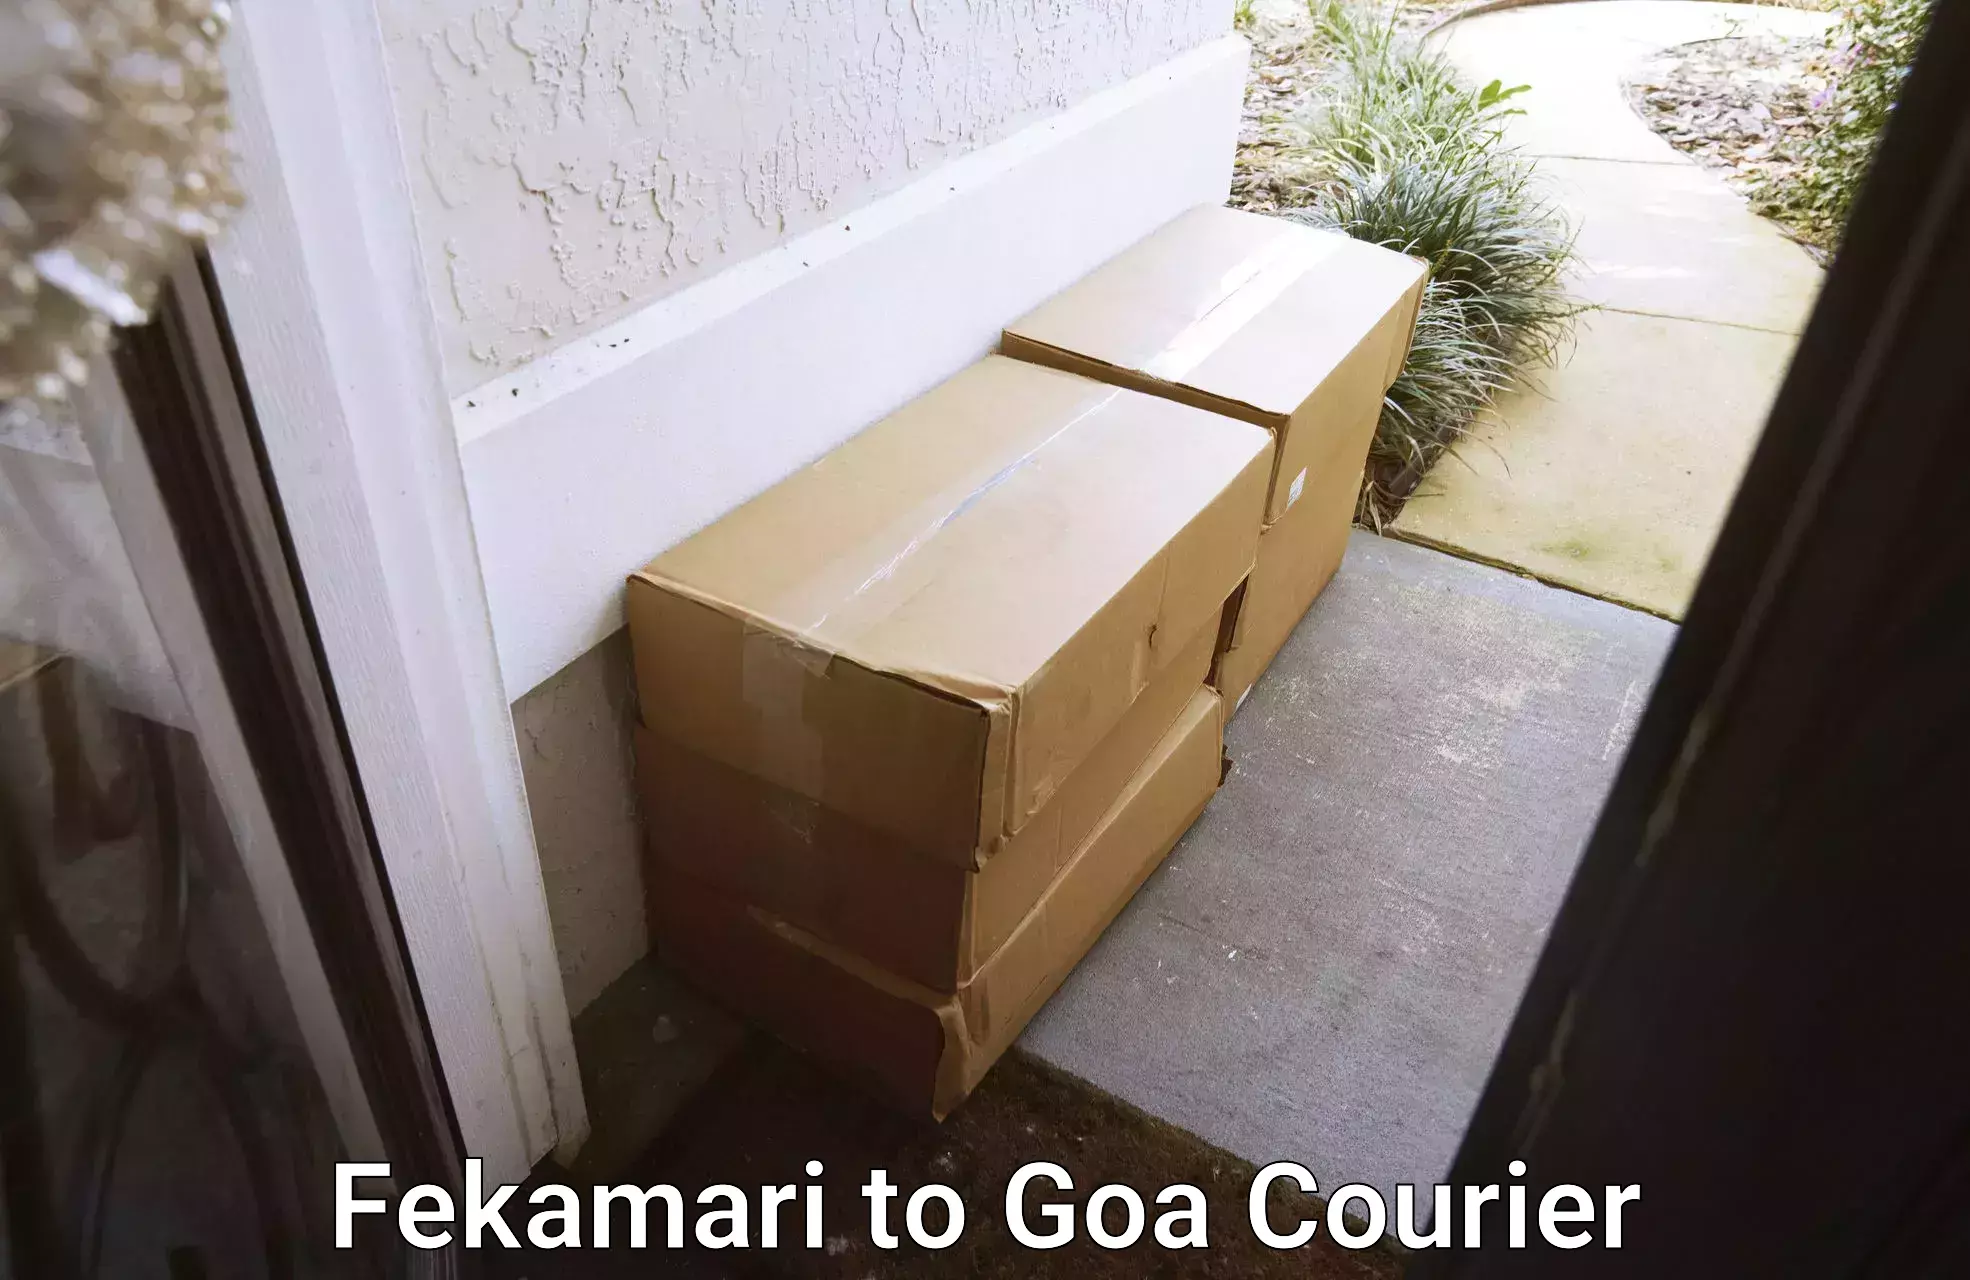 Express delivery capabilities Fekamari to Goa University